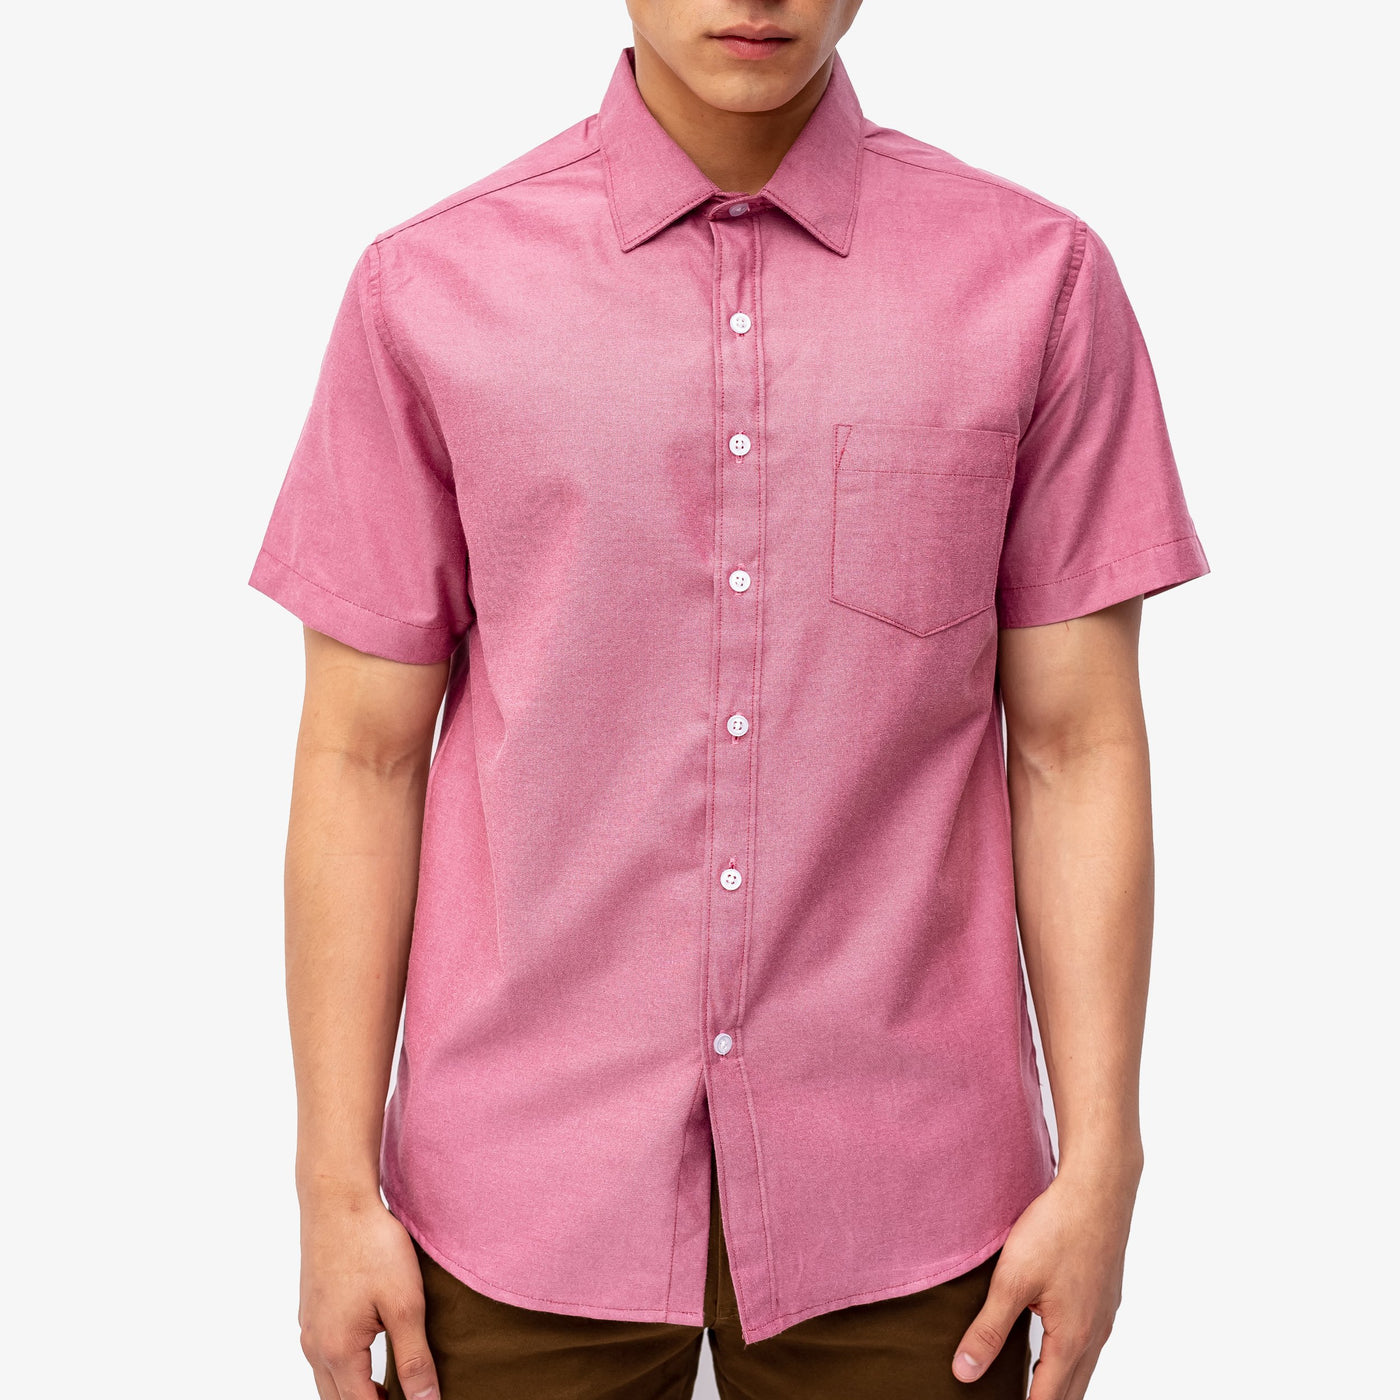 Camisa manga corta cuello normal  - palo rosa oscuro